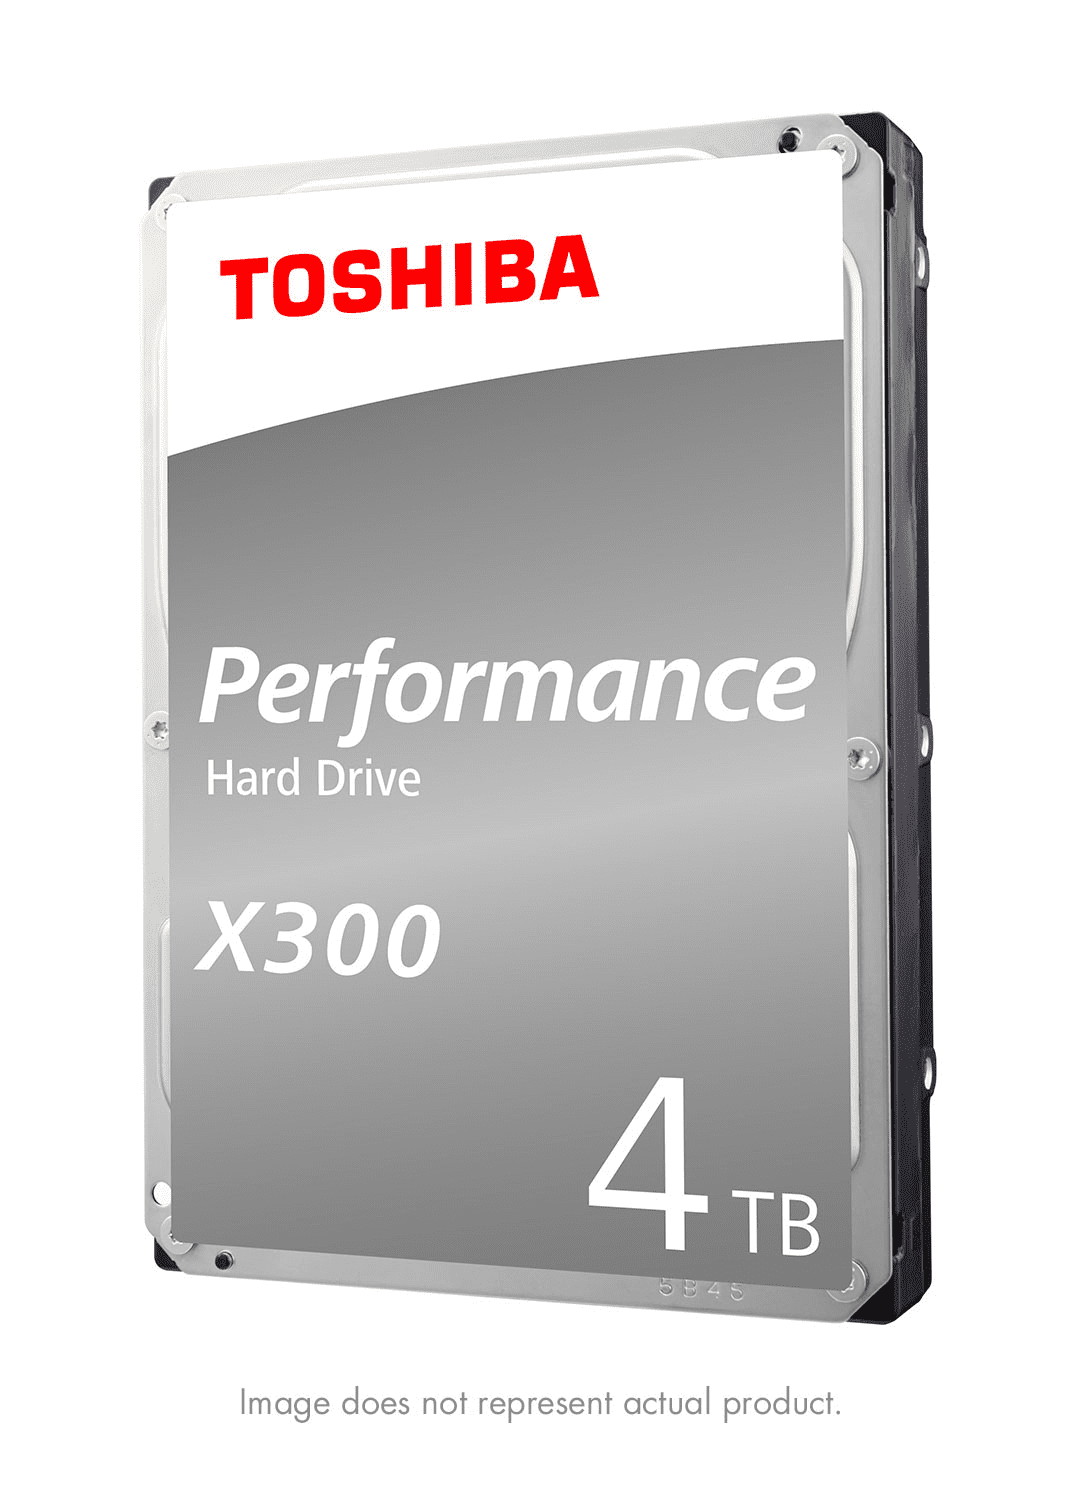 Toshiba X300 5TB Performance & Gaming Internal Hard Drive 7200 RPM